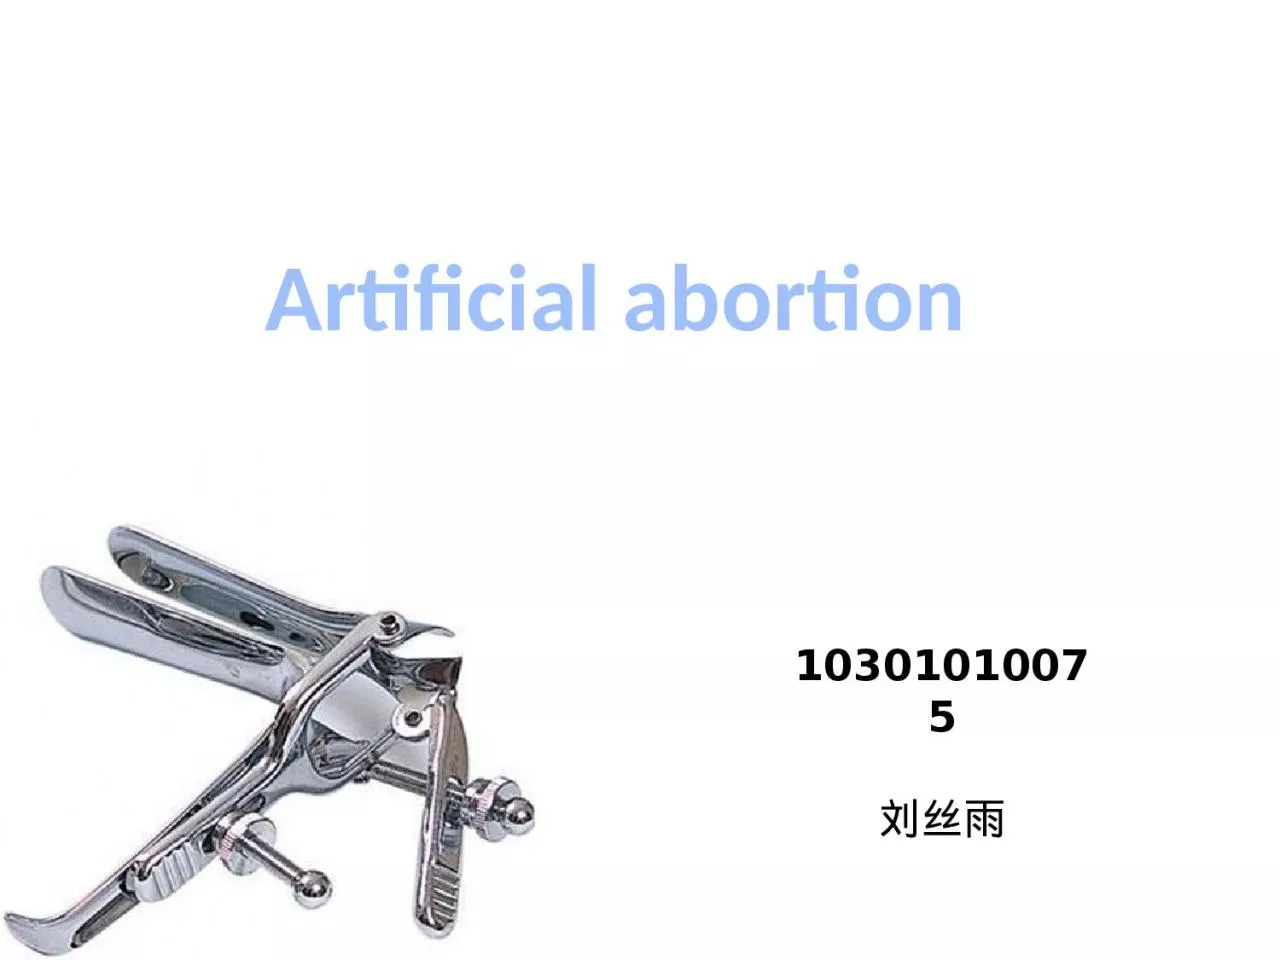 Artificial abortion 10301010075